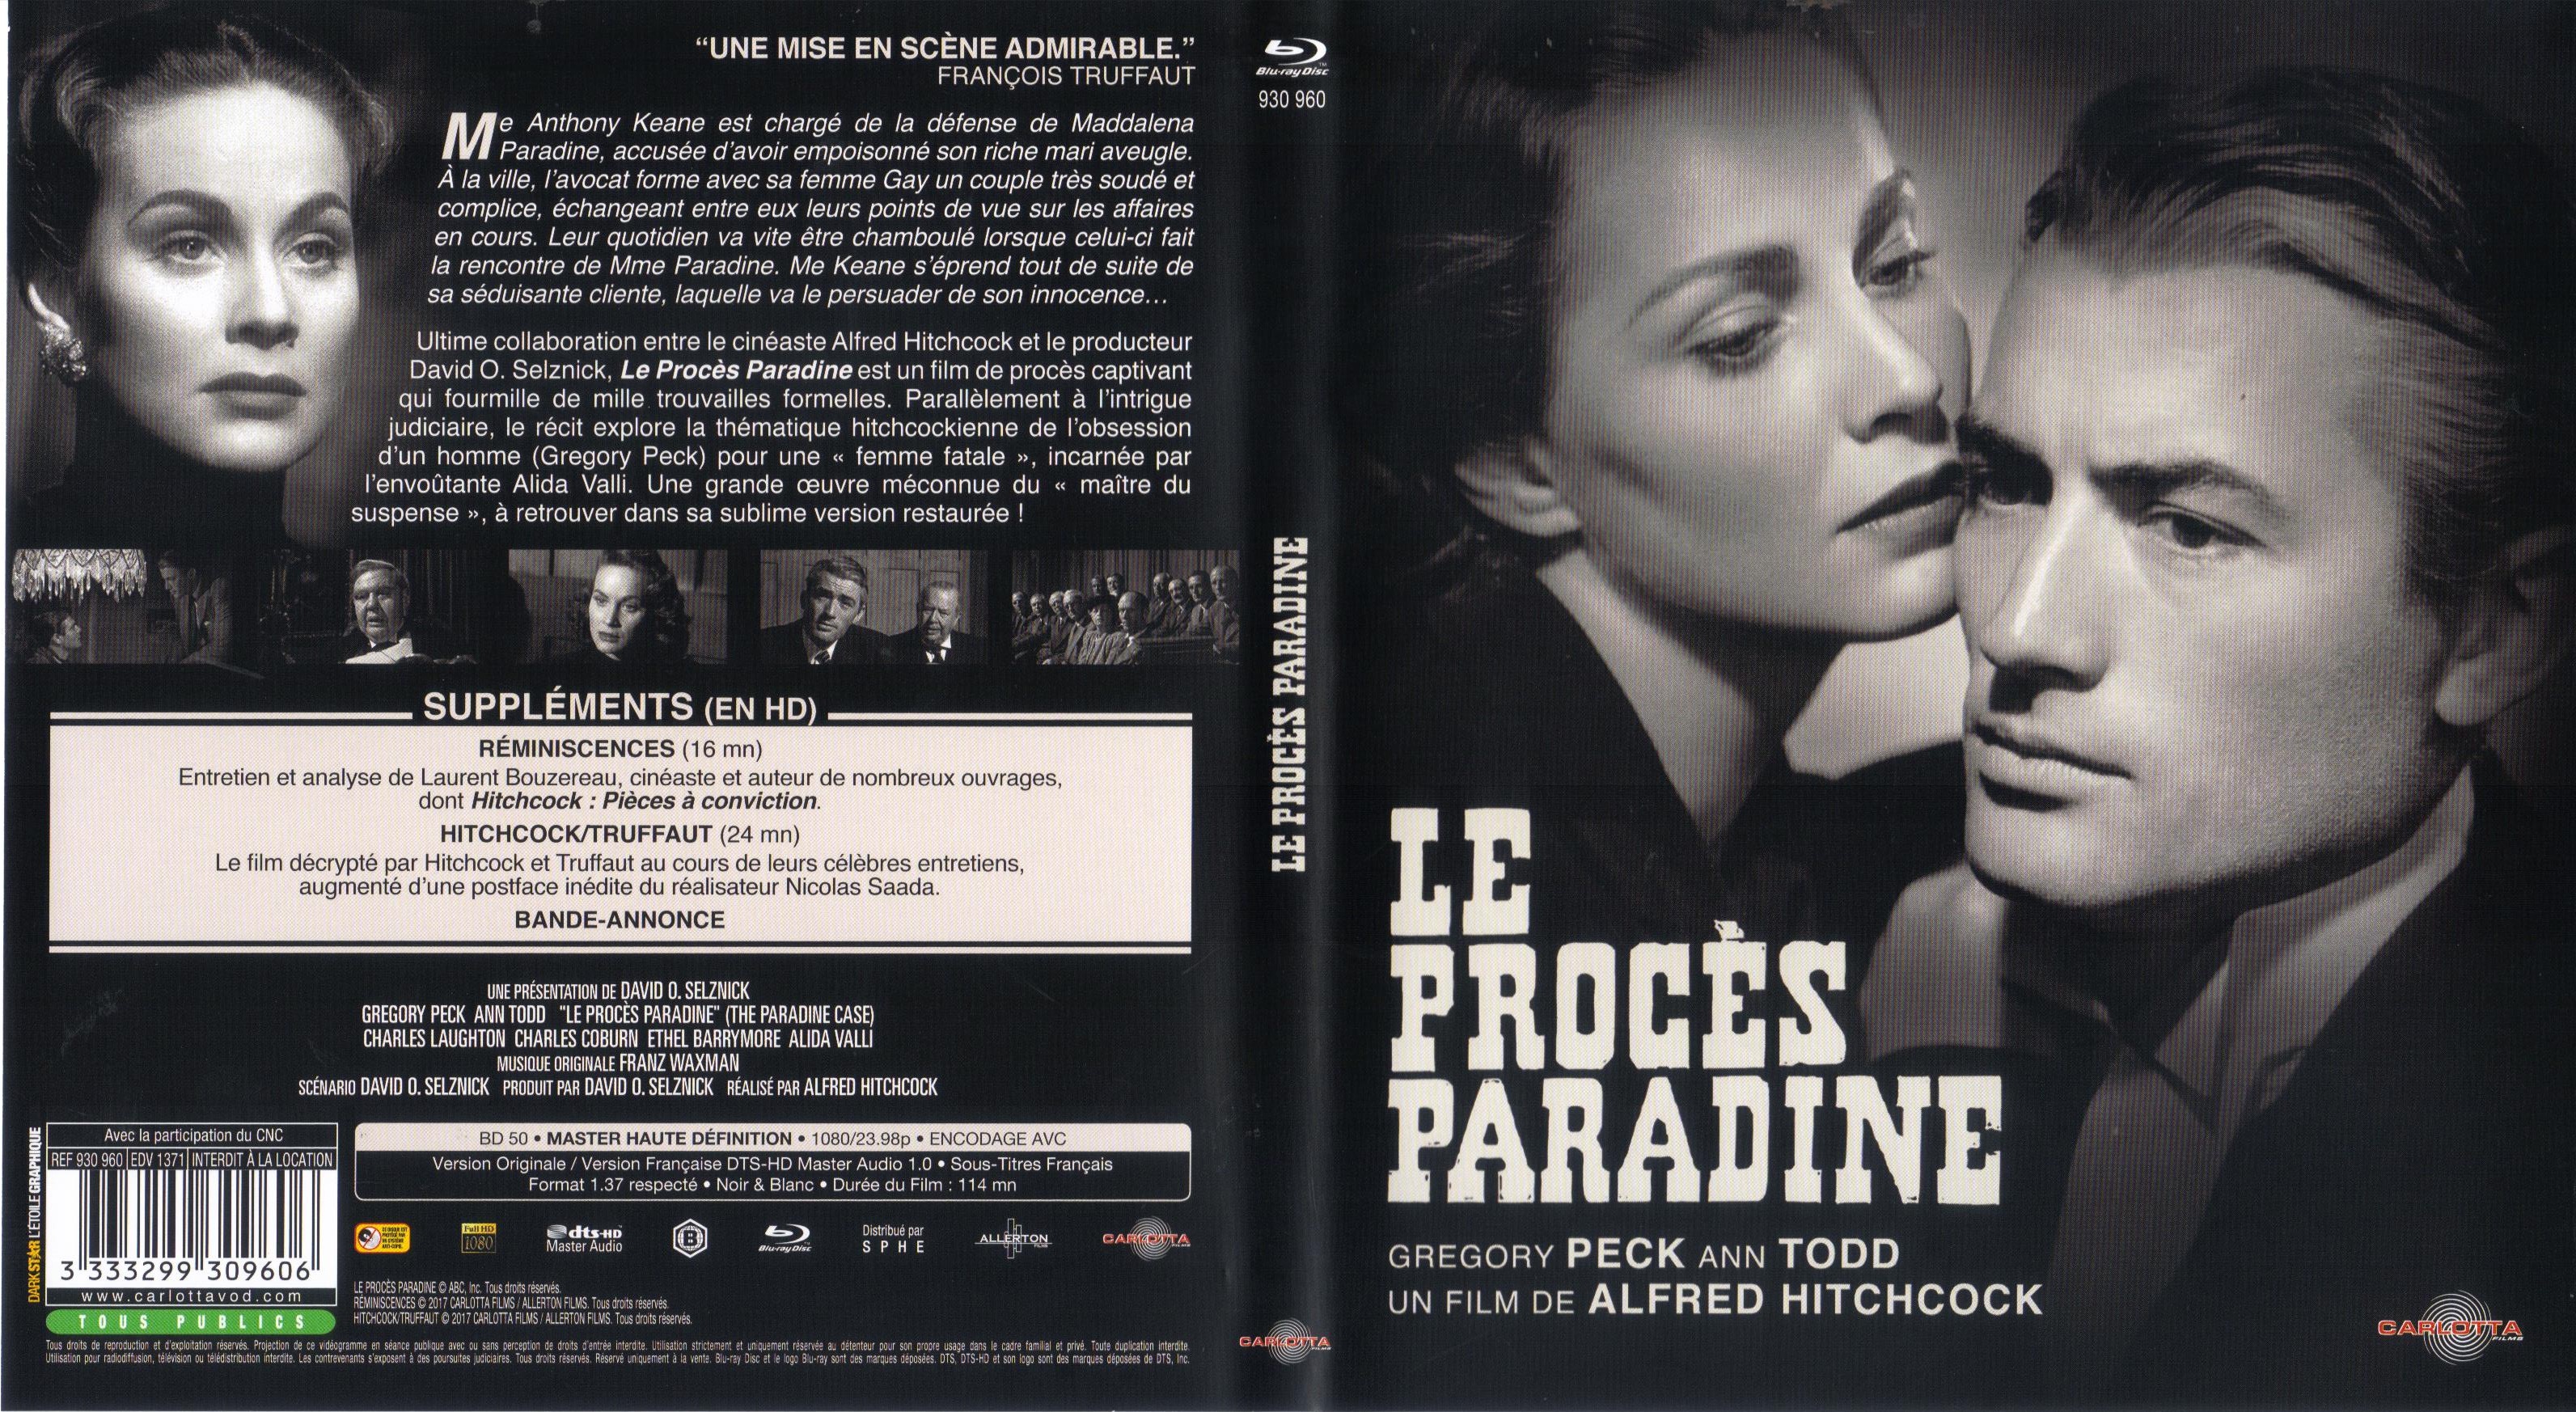 Jaquette DVD Le procs Paradine (BLU-RAY)